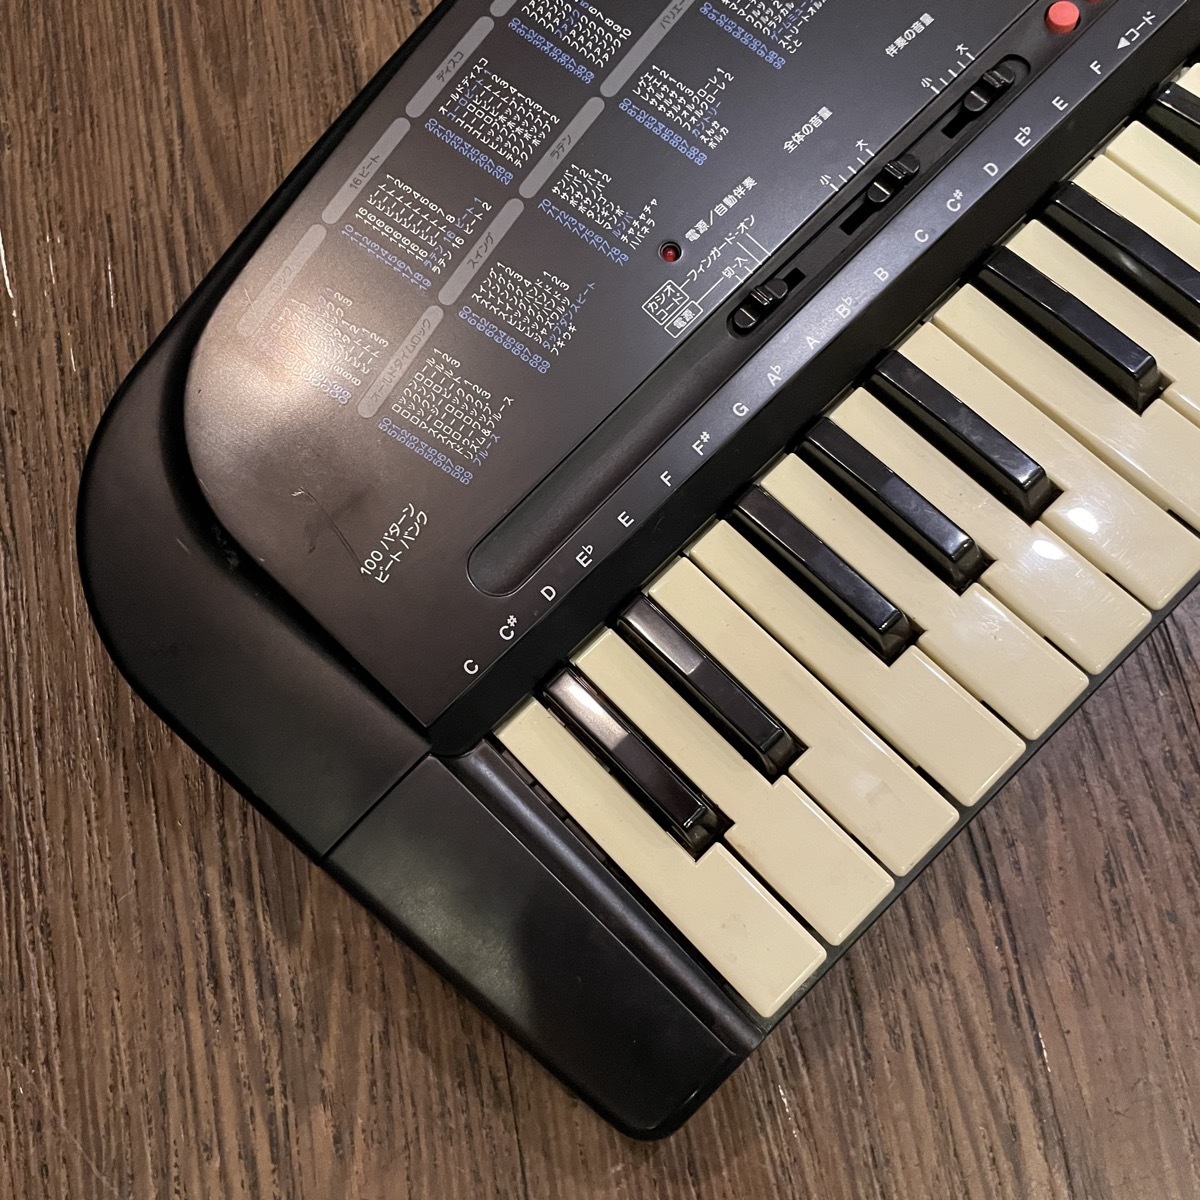 Casio MA-120 Keyboard  casio    клавиатура   продаю как нерабочий   - m102